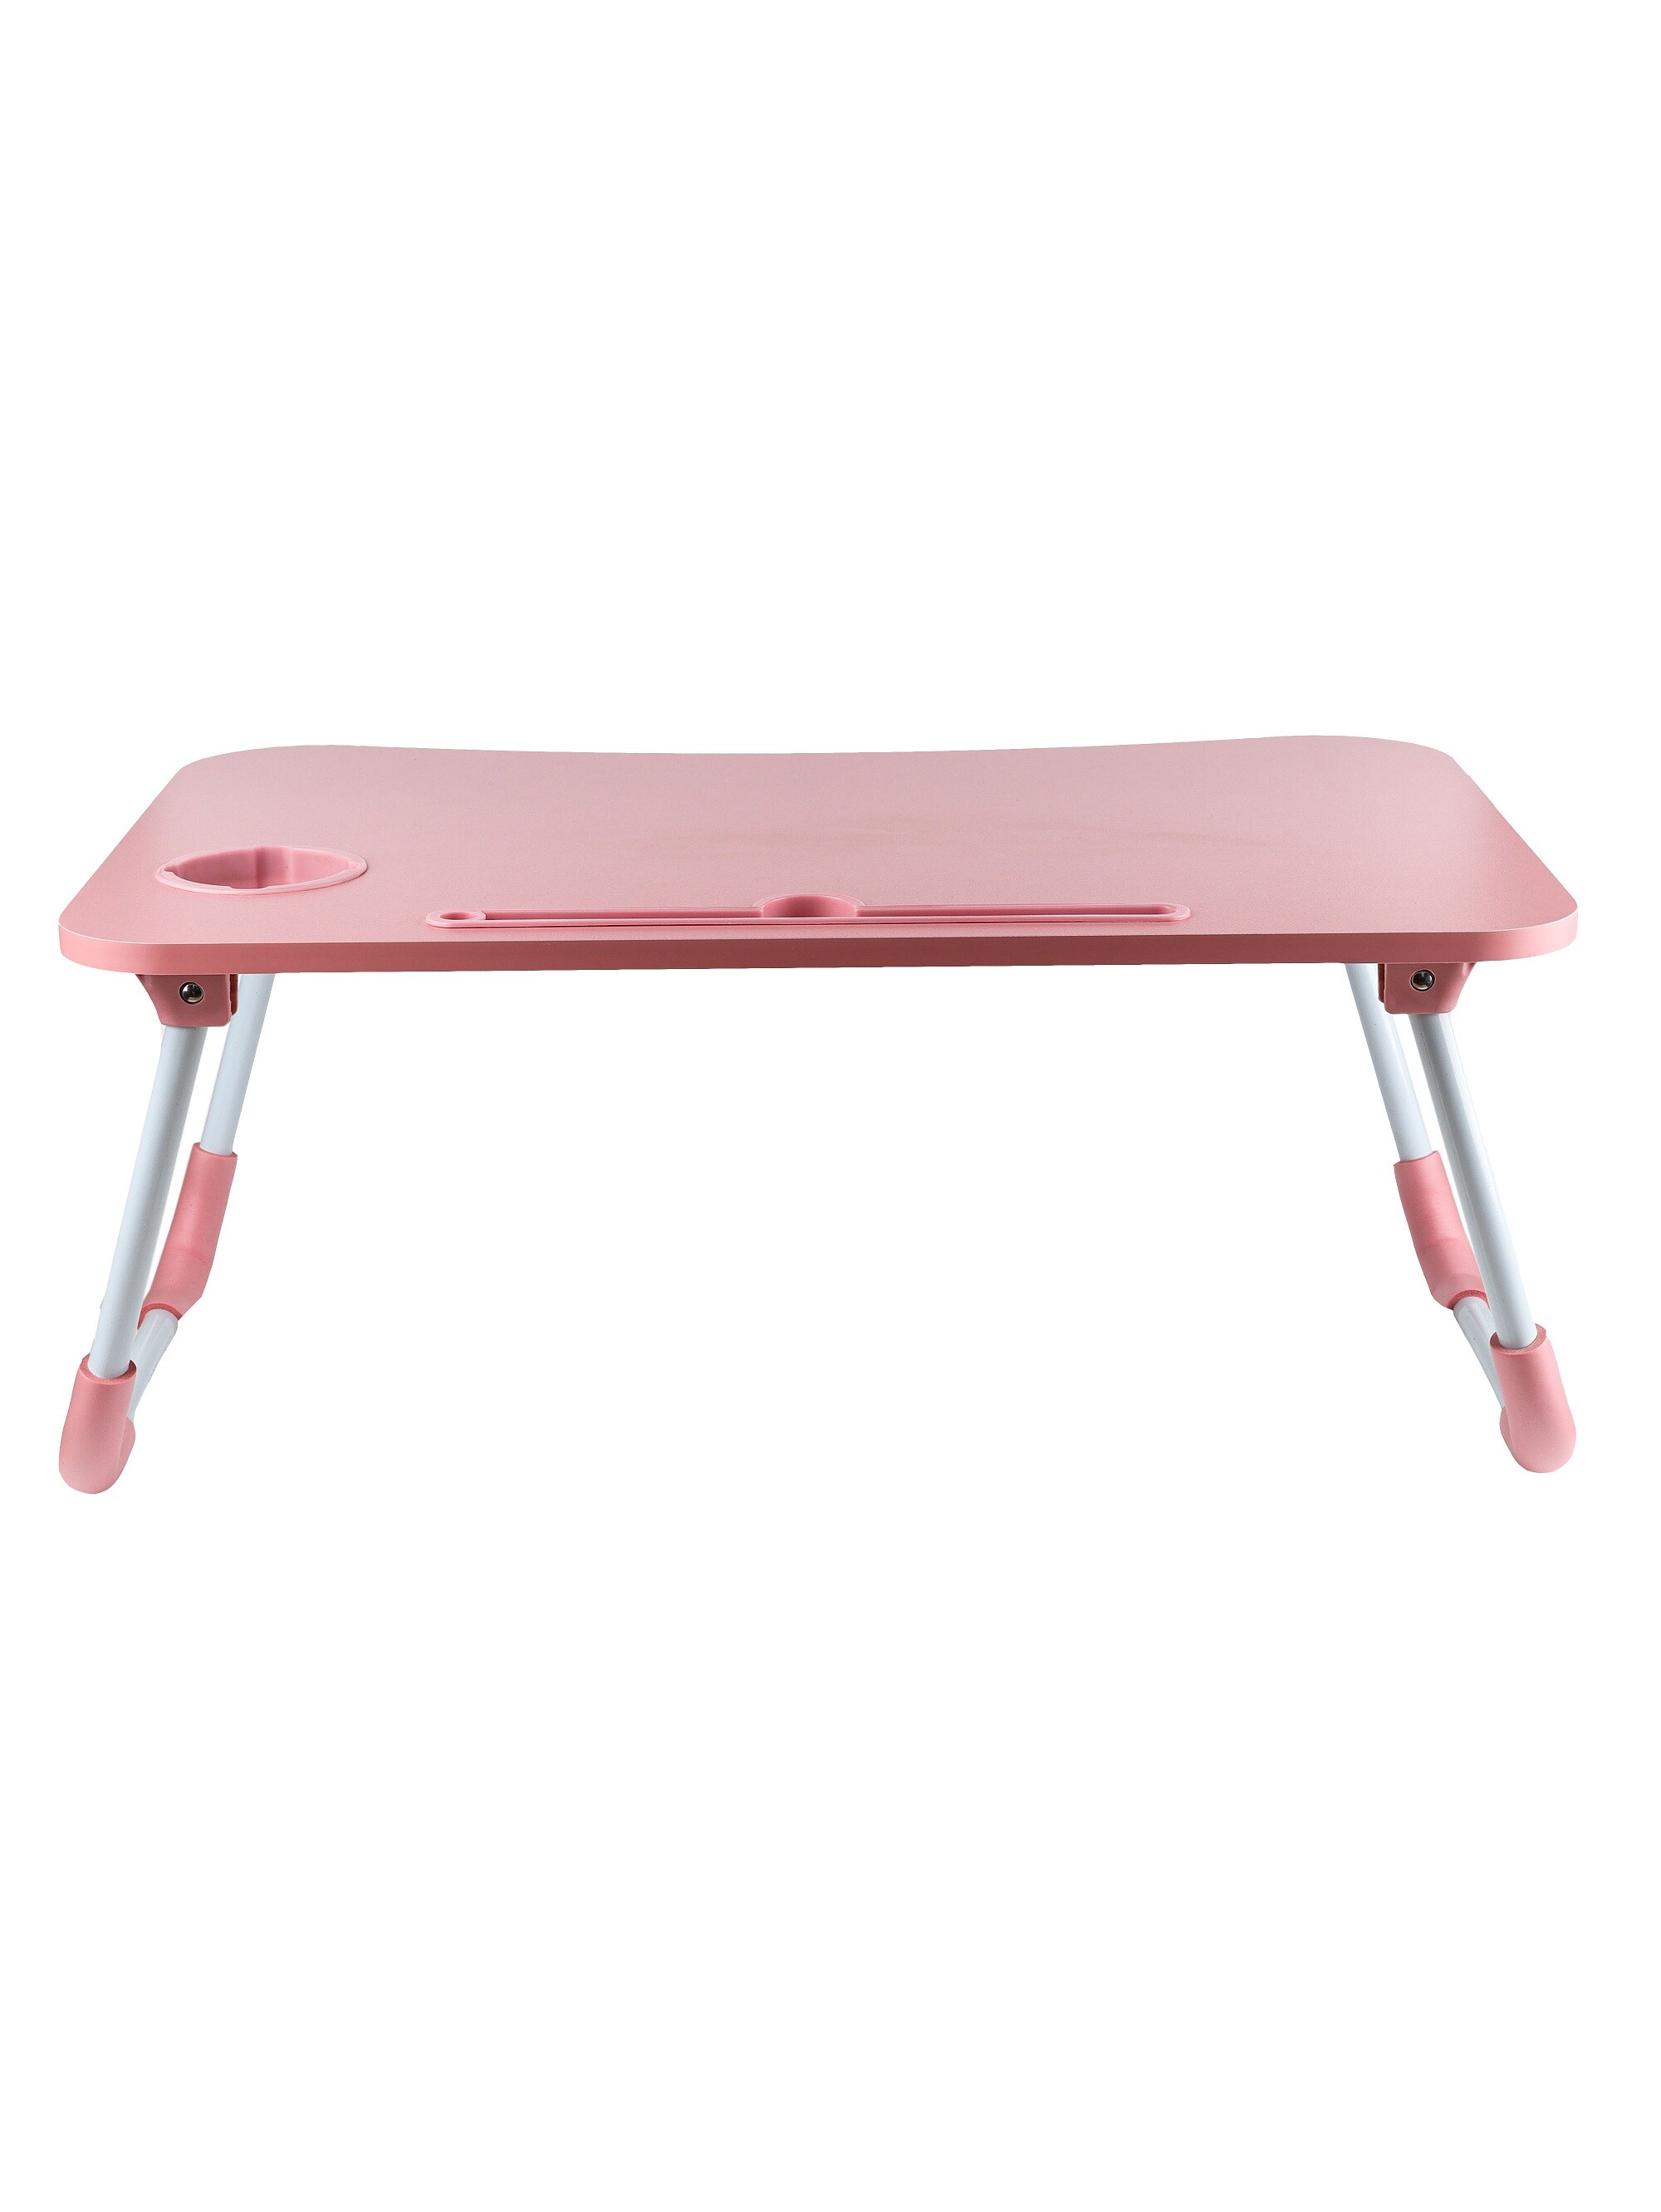 Подставка столик для ноутбука Solmax розовая, 60х40, складной